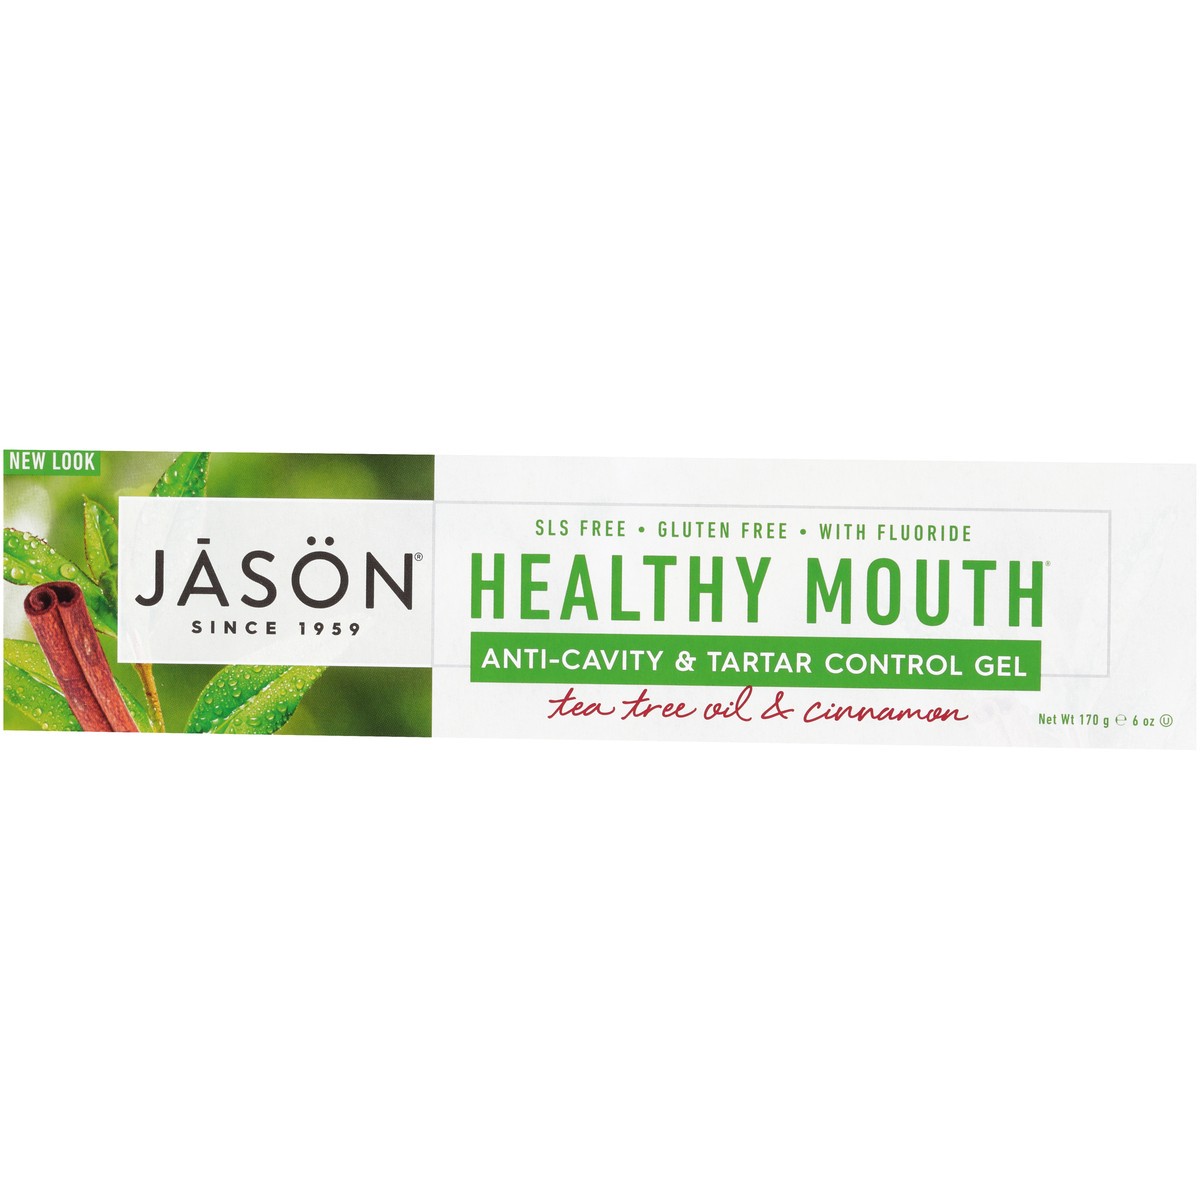 slide 5 of 8, Jason JĀSON Healthy Mouth Tea Tree Oil & Cinnamon Anti-Cavity & Tartar Control Gel 6 oz. Box, 6 oz